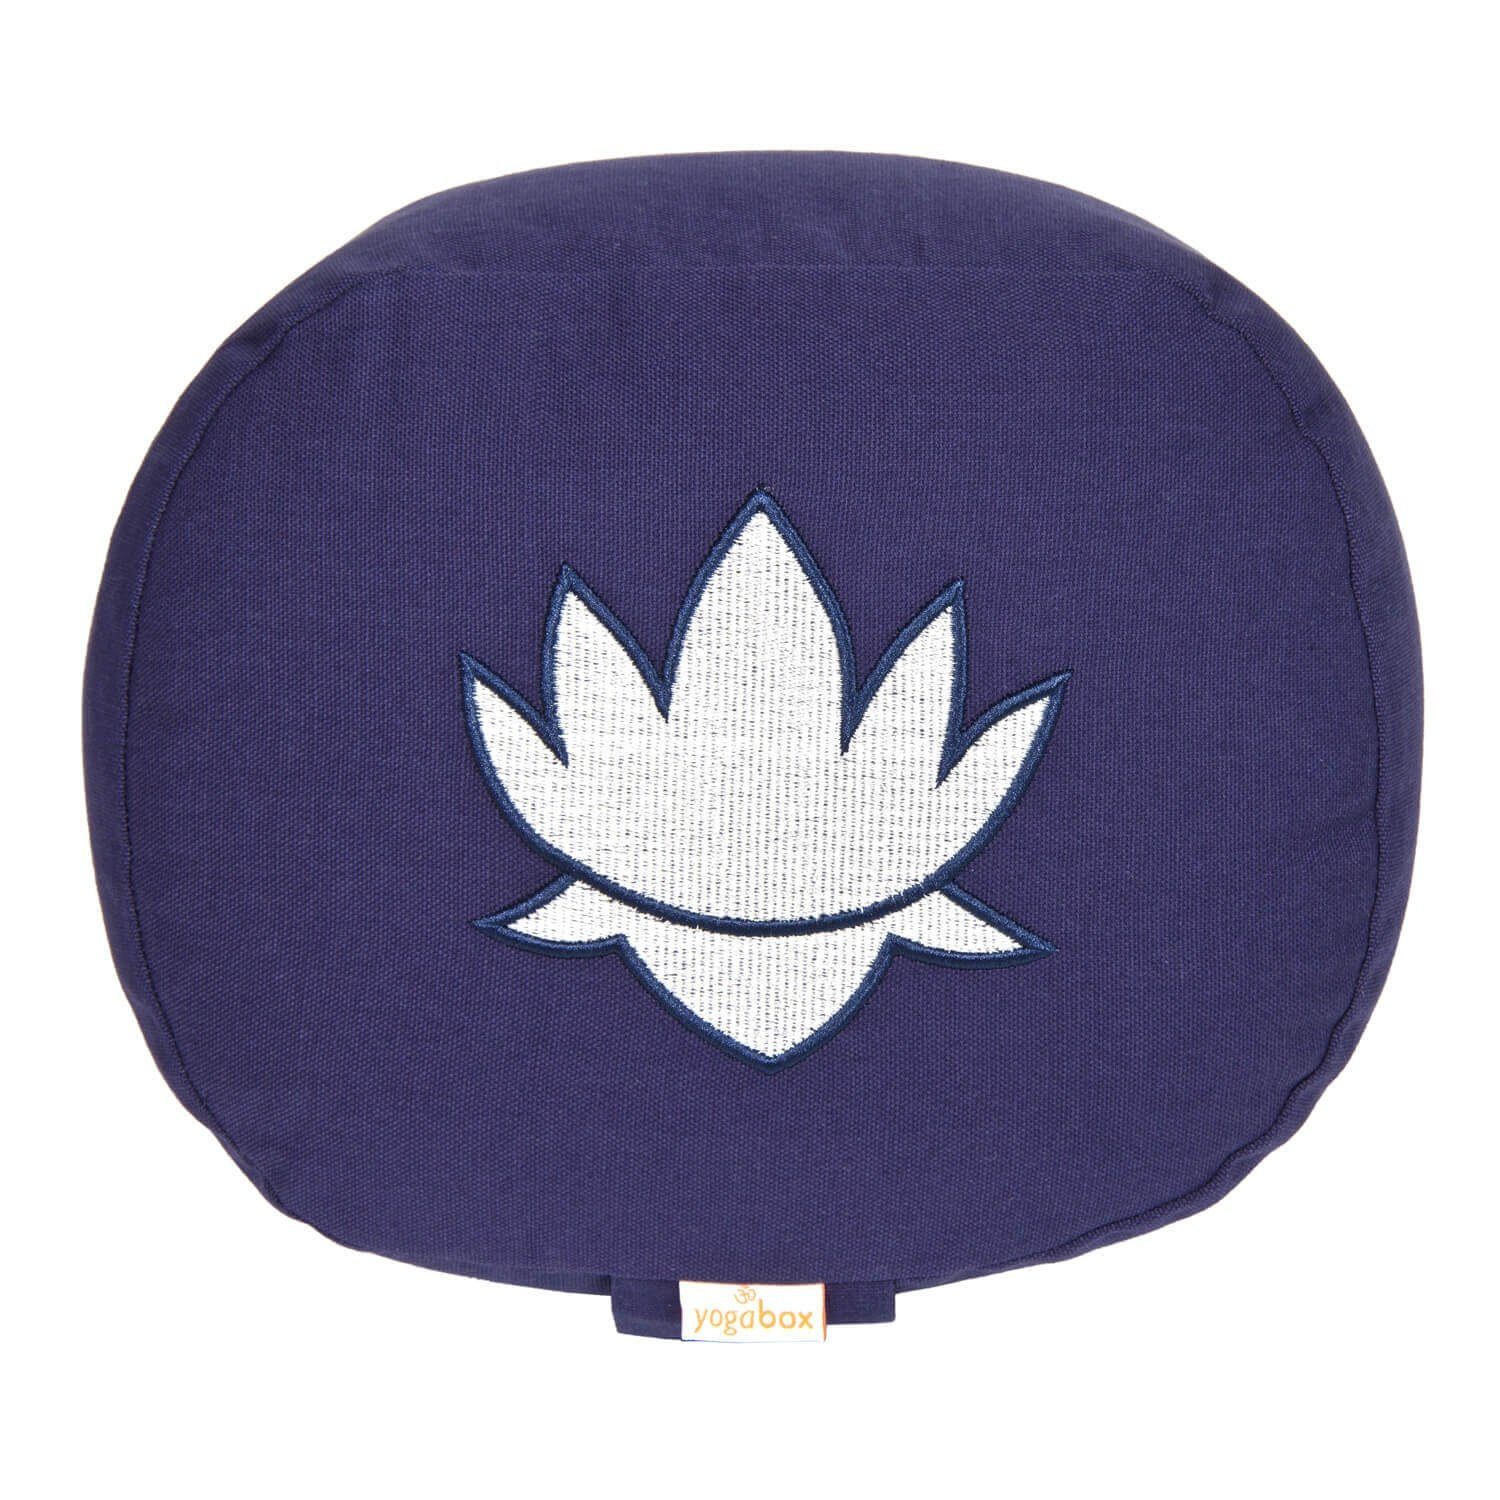 yogabox dunkelblau BASIC Stick oval Yogakissen Lotus